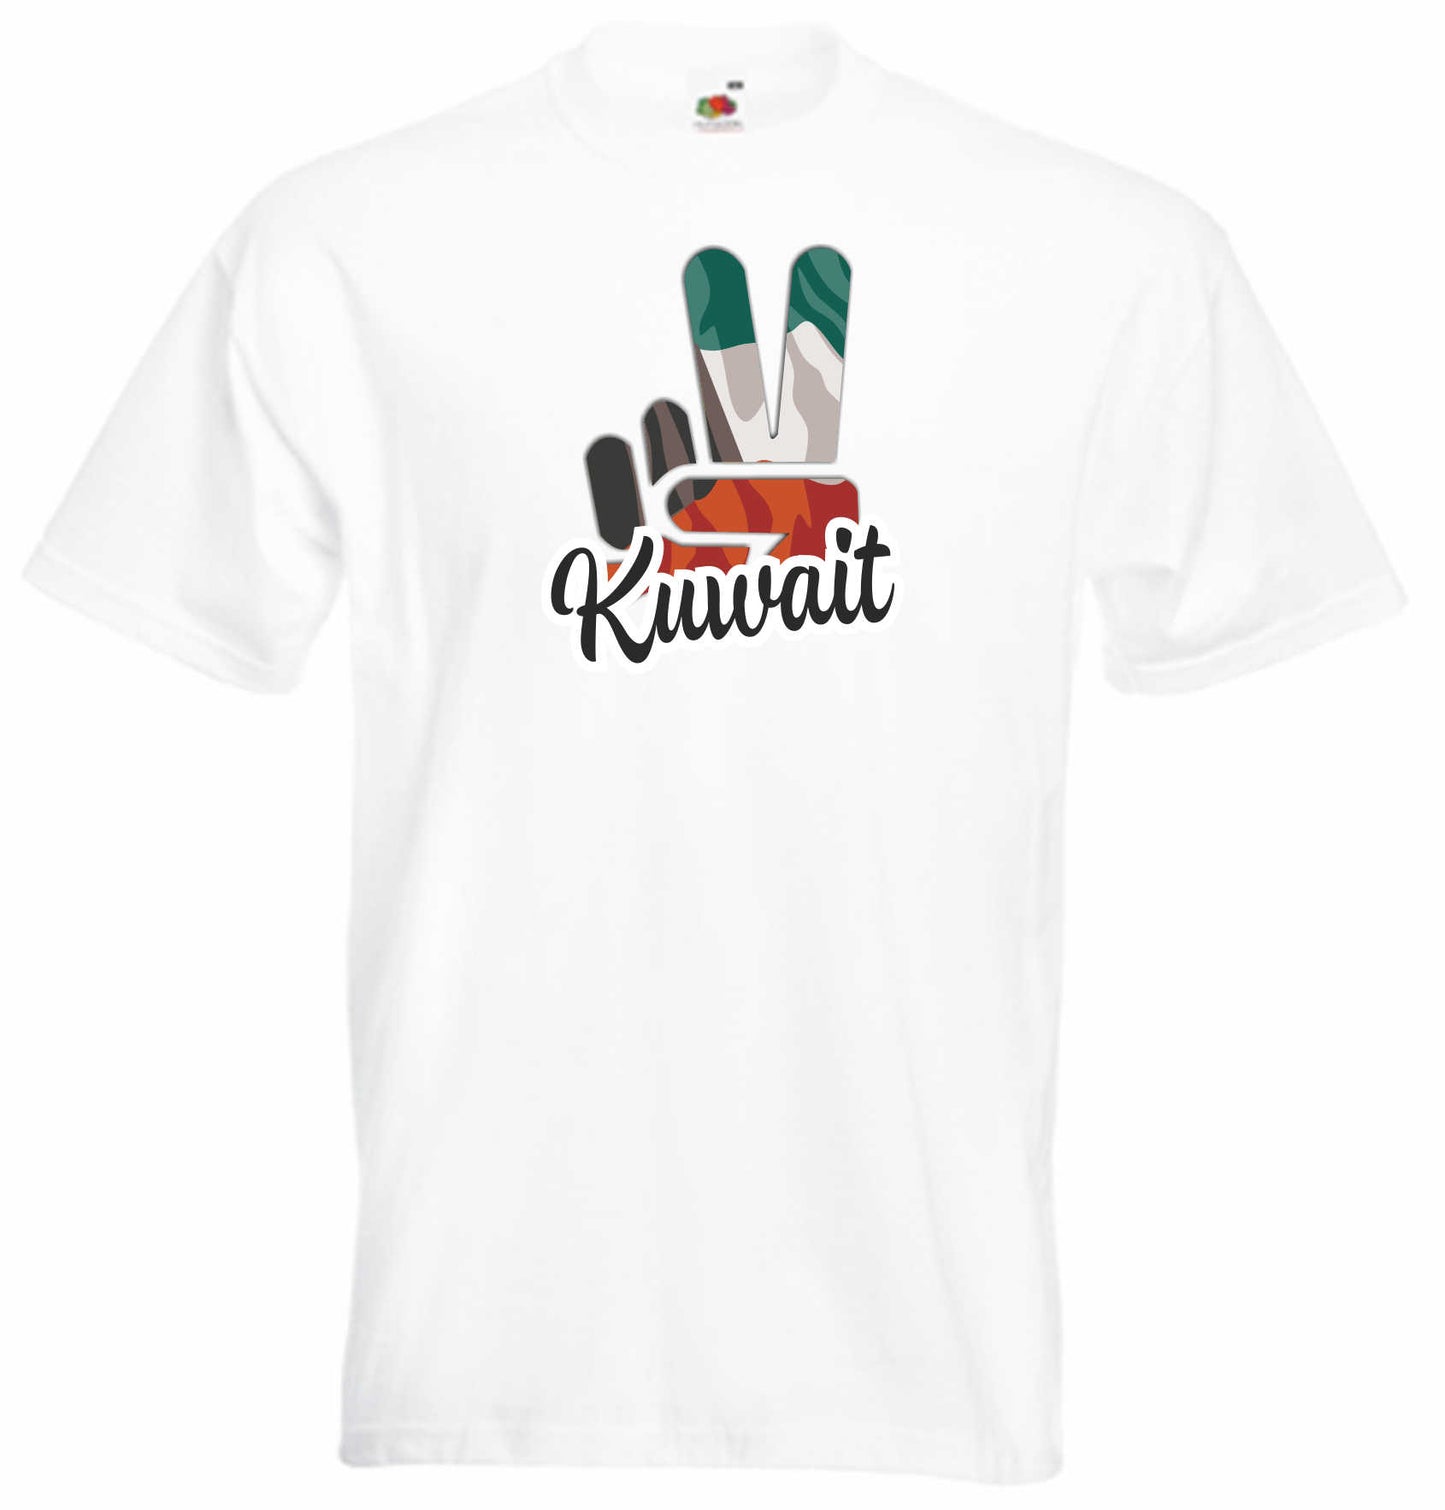 T-Shirt Herren - Victory - Flagge / Fahne - Kuwait - Sieg